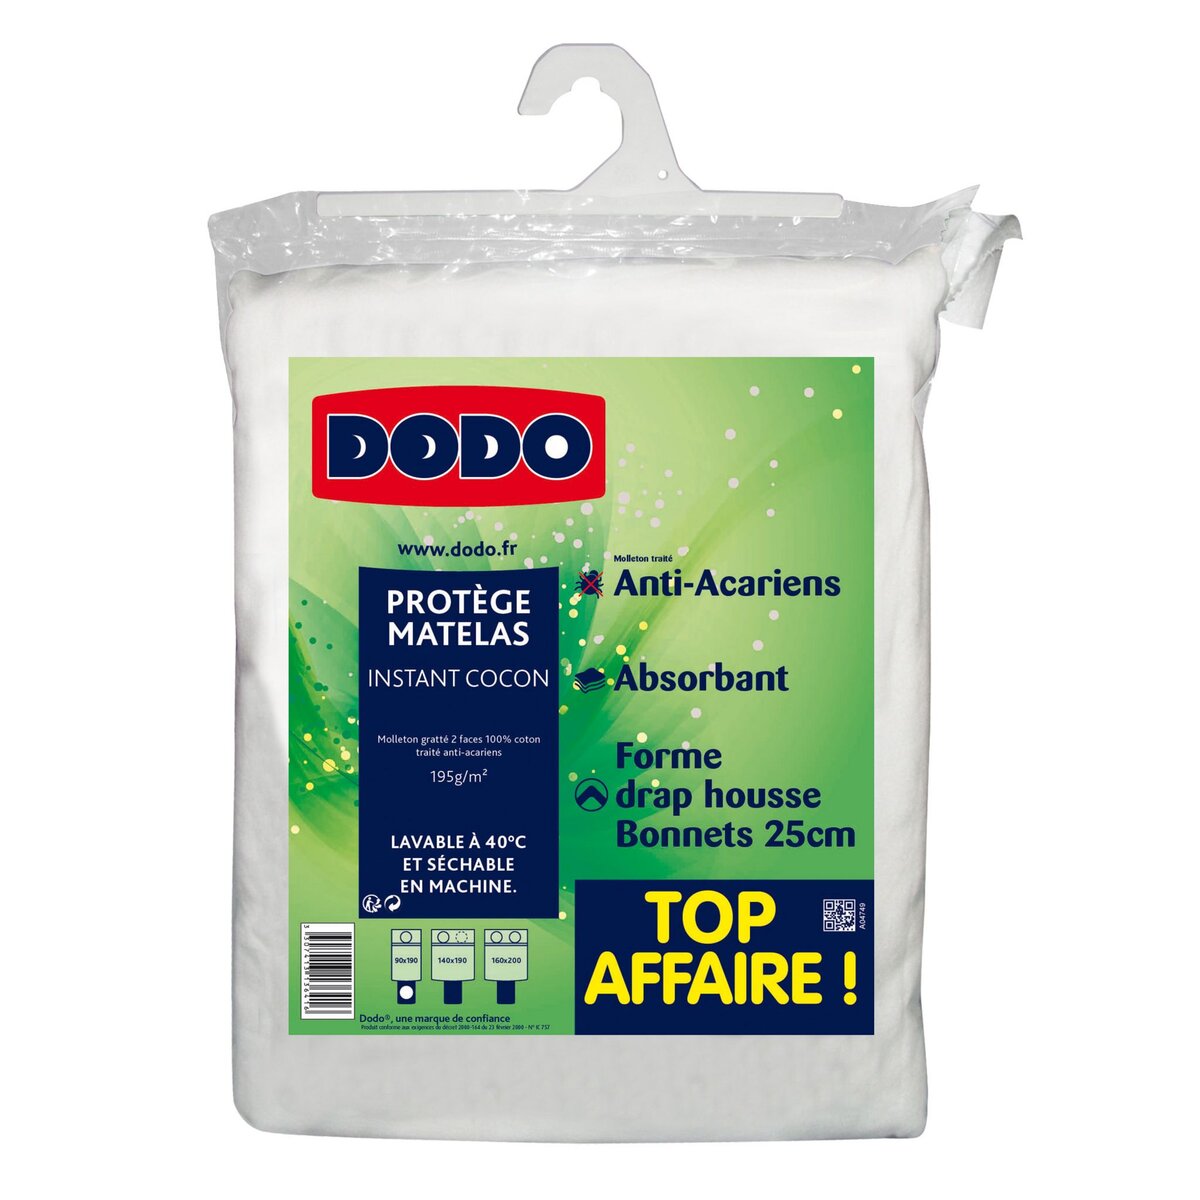 DODO Protège matelas absorbant molleton anti-acariens INSTANT COCON